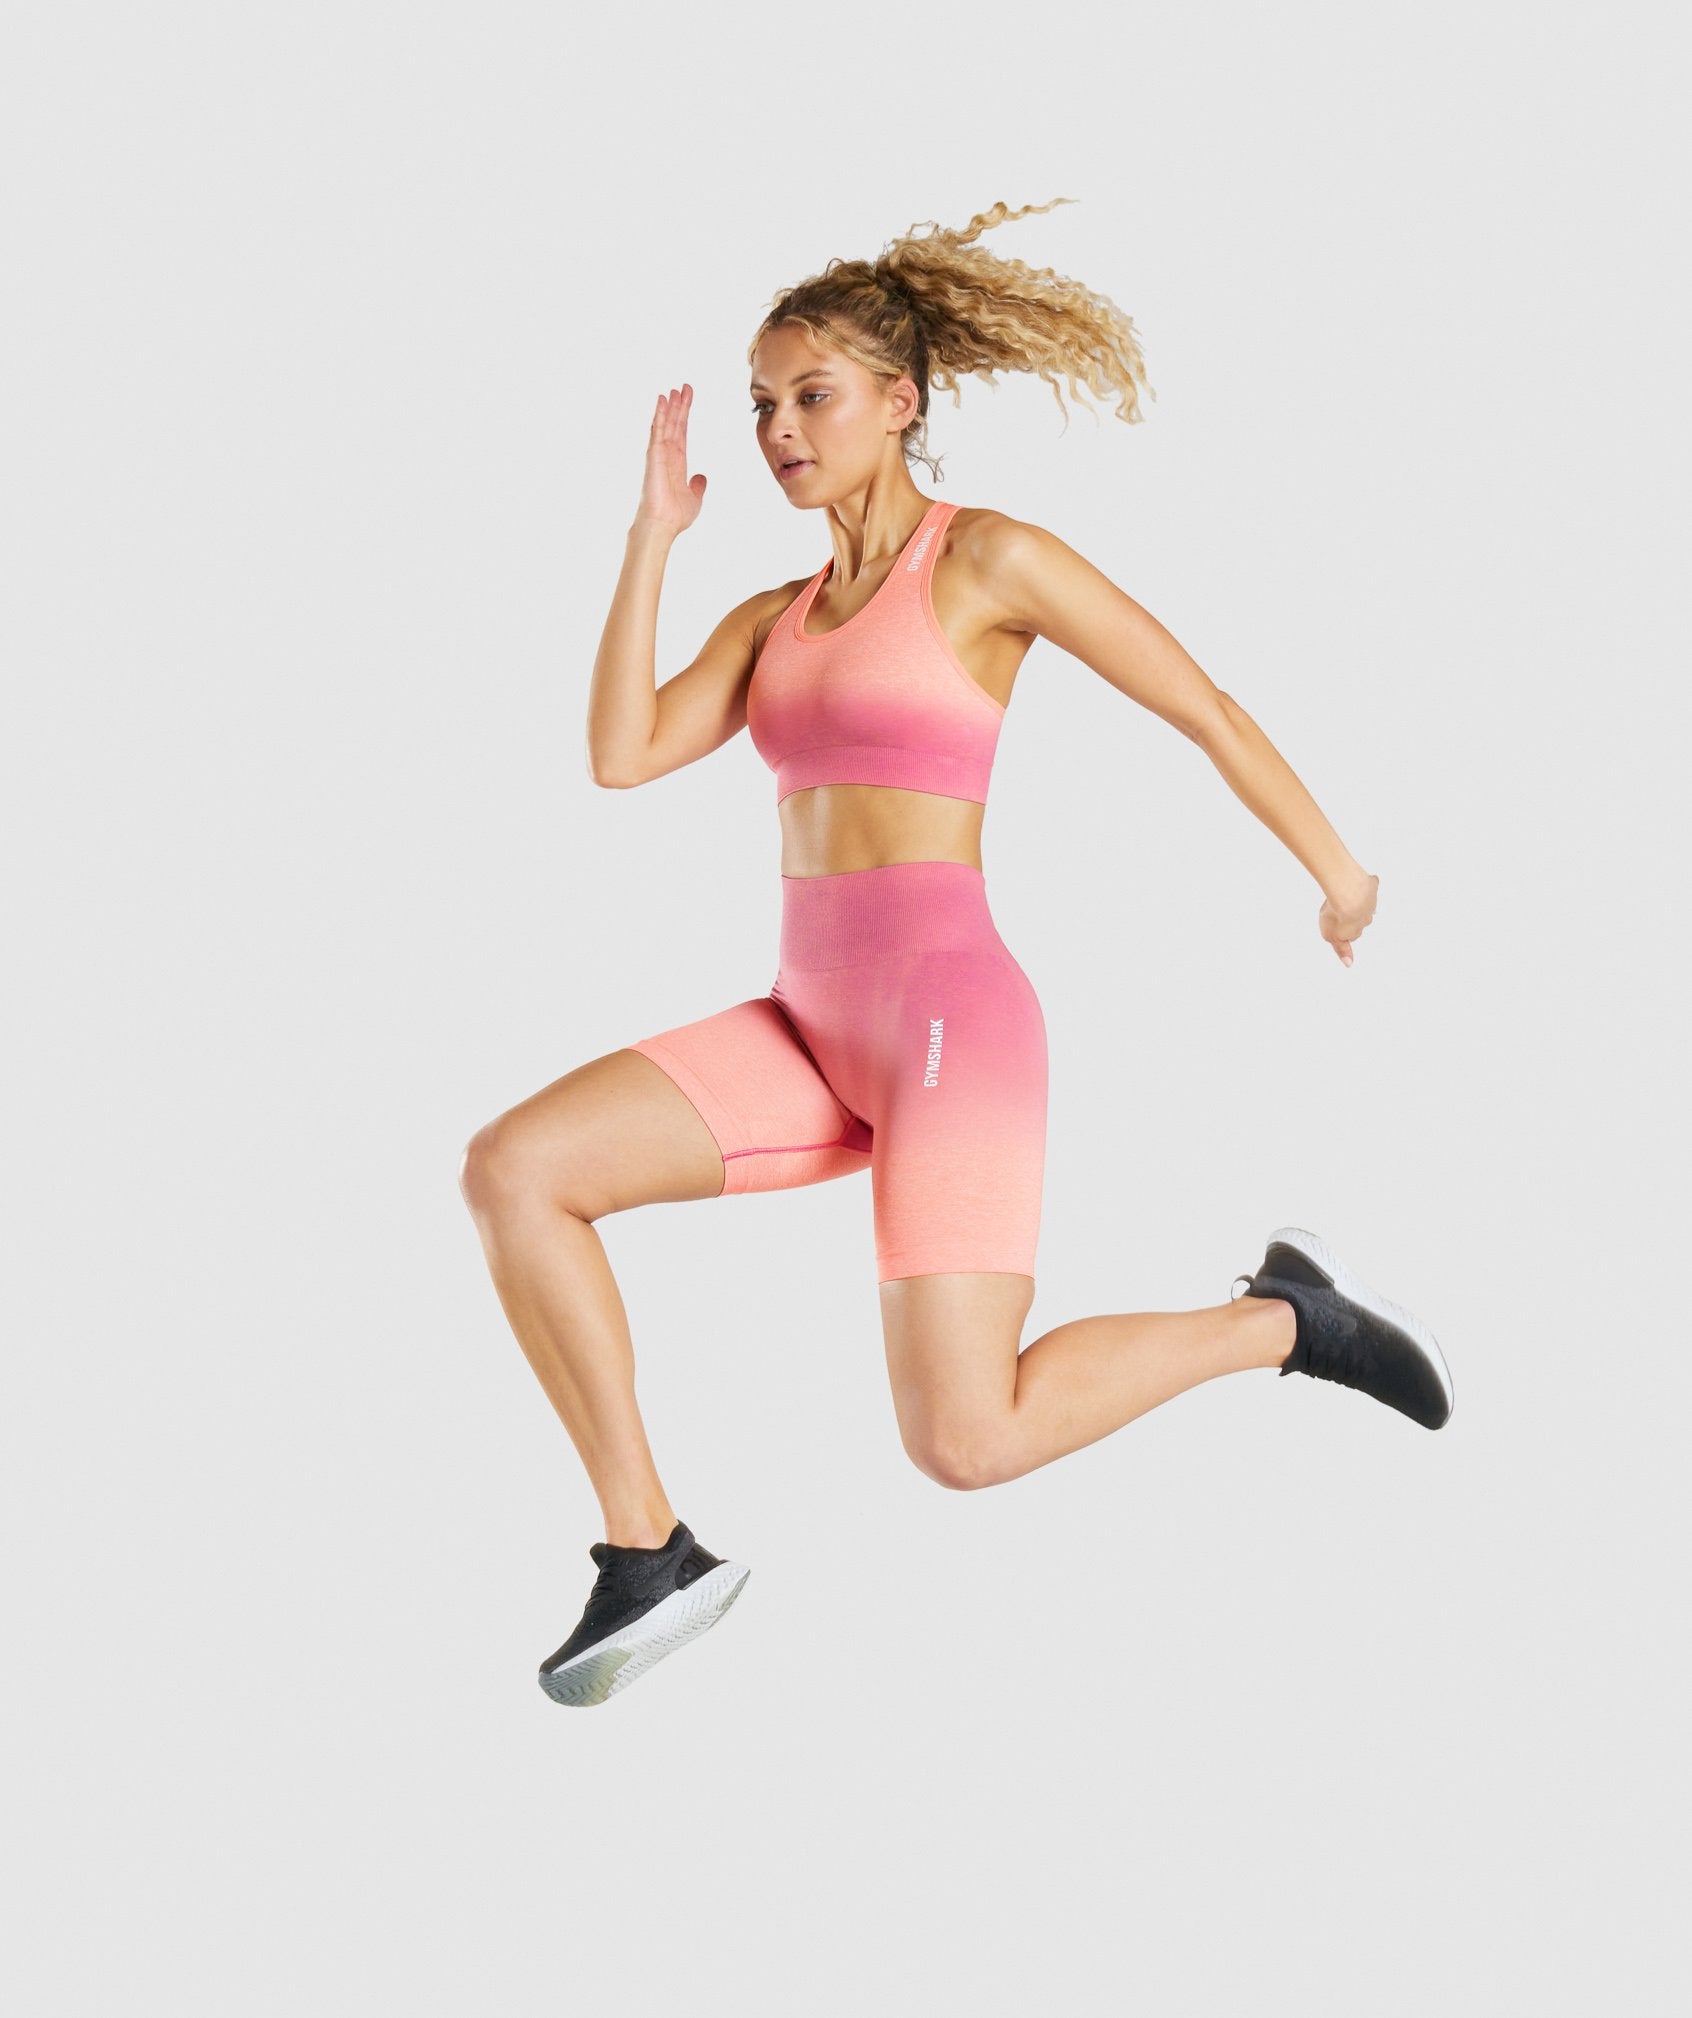 Gymshark Size Med Adapt Ombre Seamless Workout Gym Leggings Orange